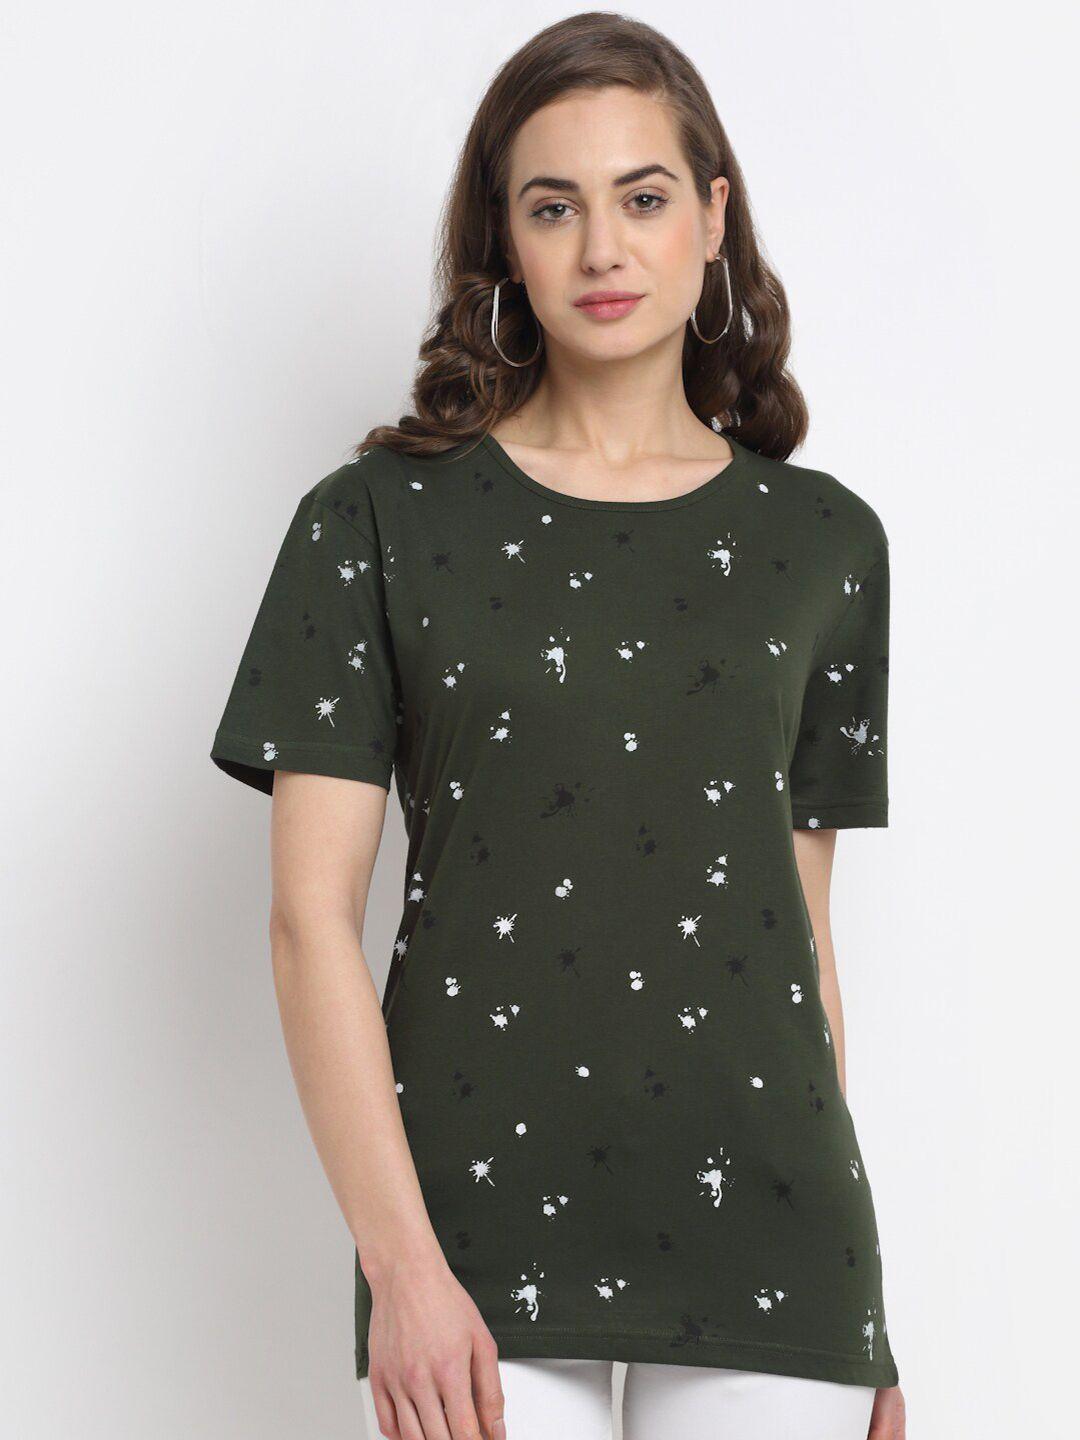 vimal-jonney-women-olive-green-&-white-printed-t-shirt